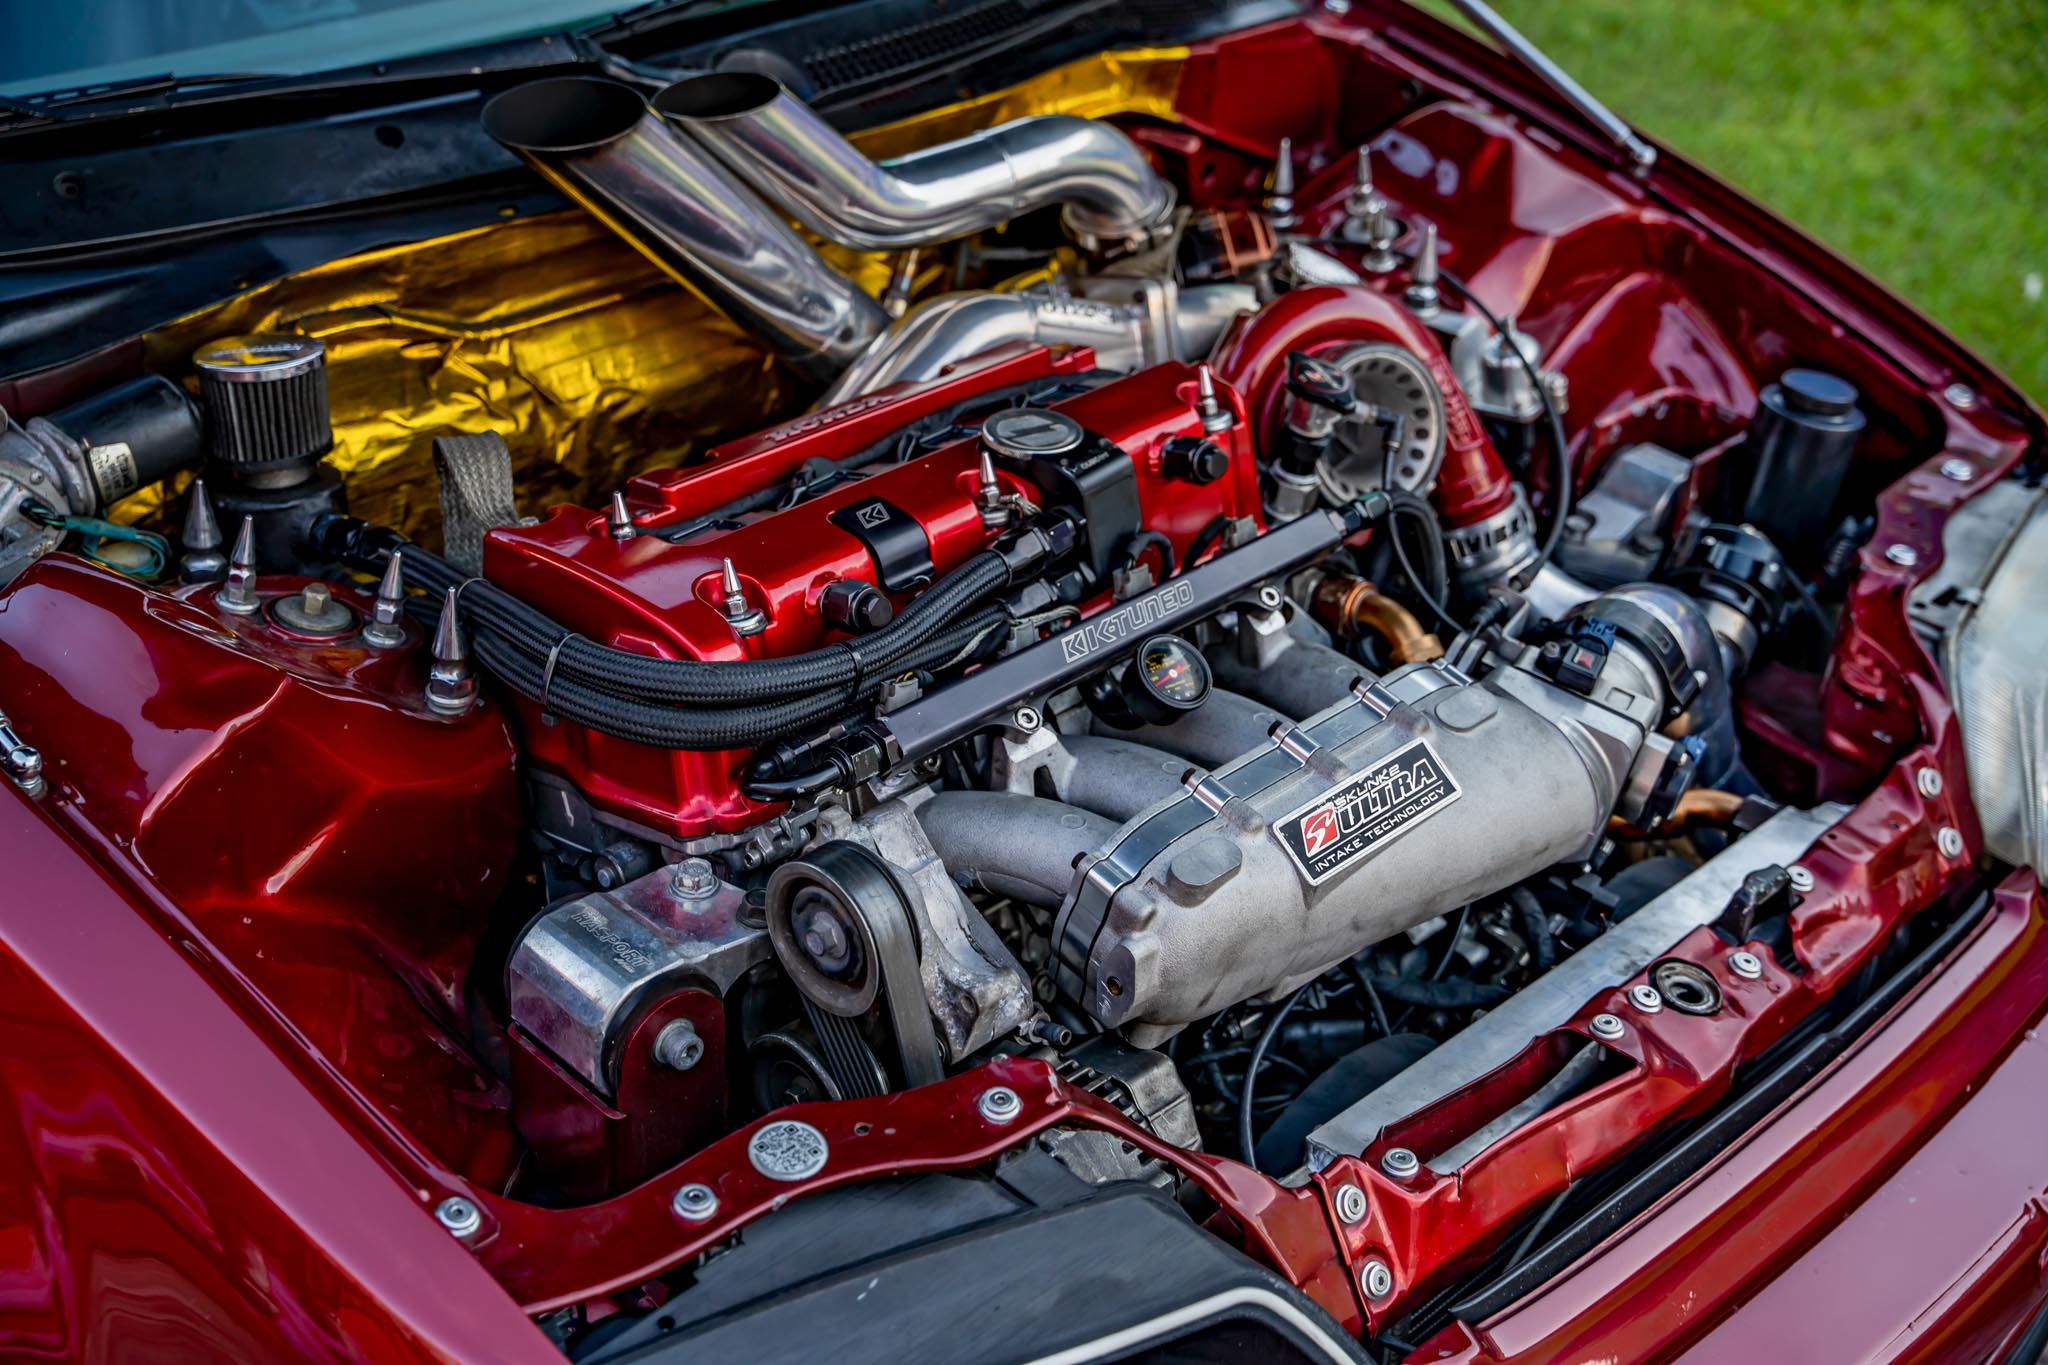 Turbo K20a2